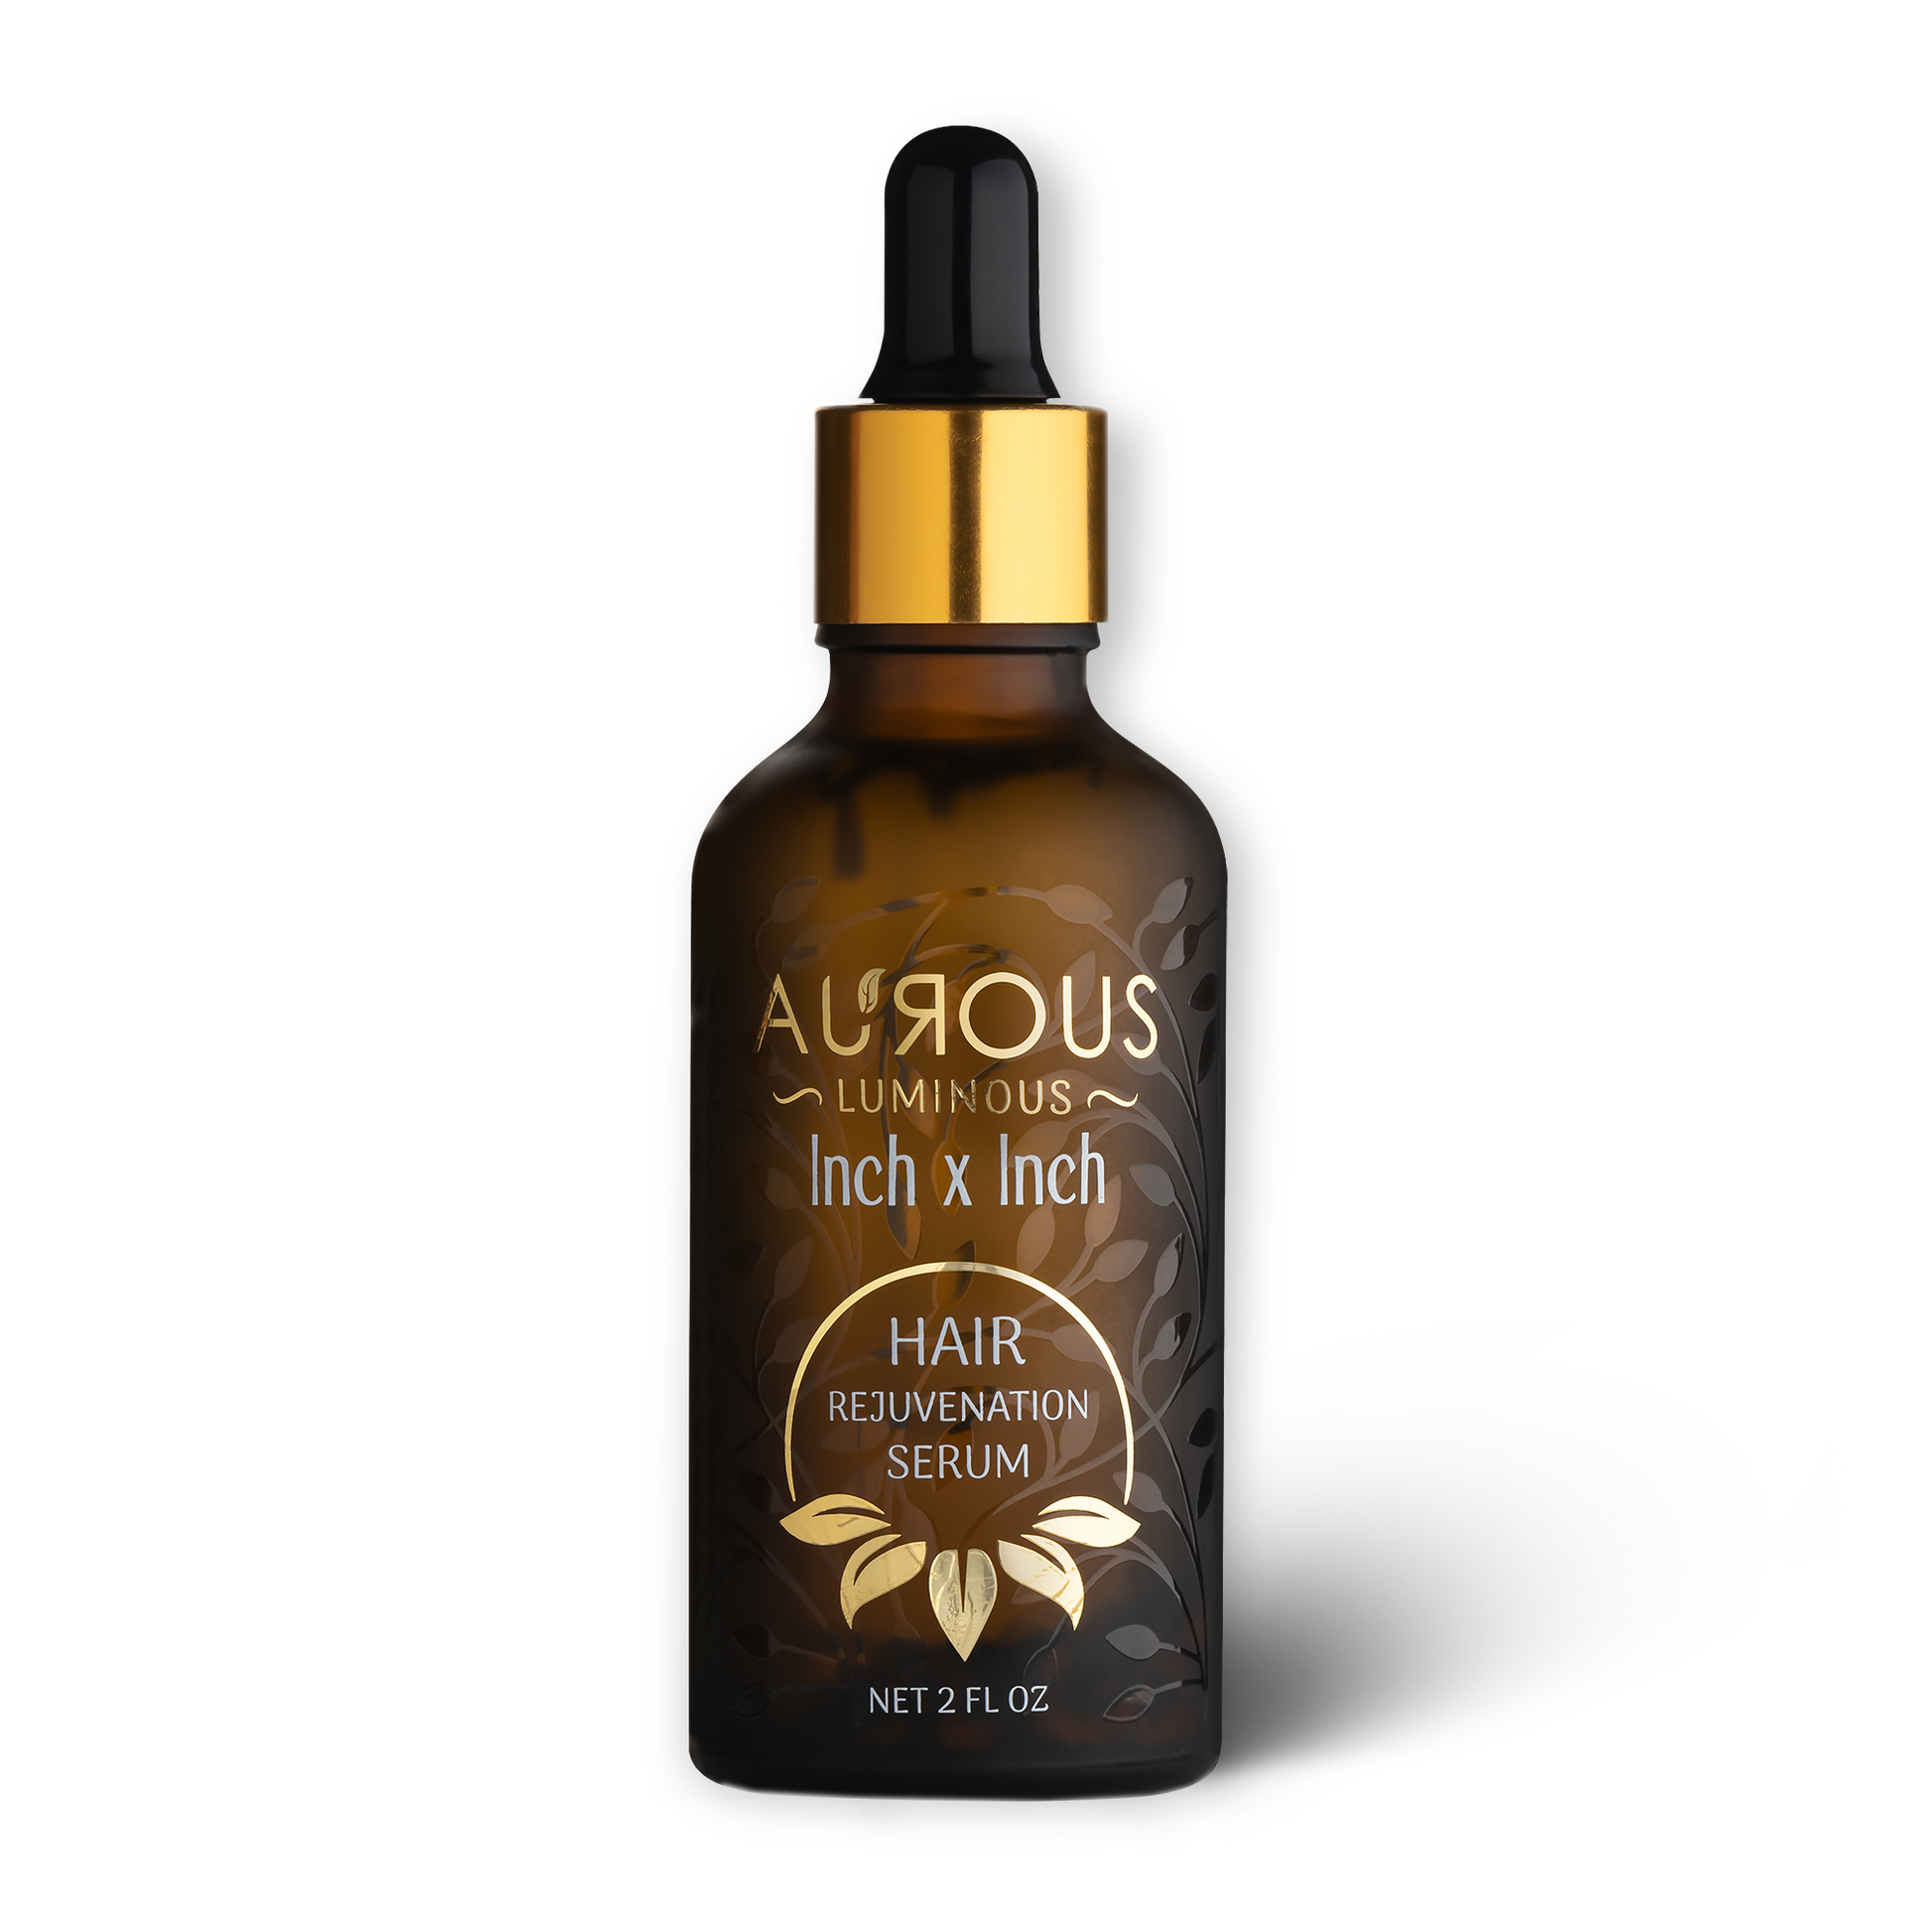 Hair Growth Rejuvenation Serum Aurous Luminous Gold bottle premium